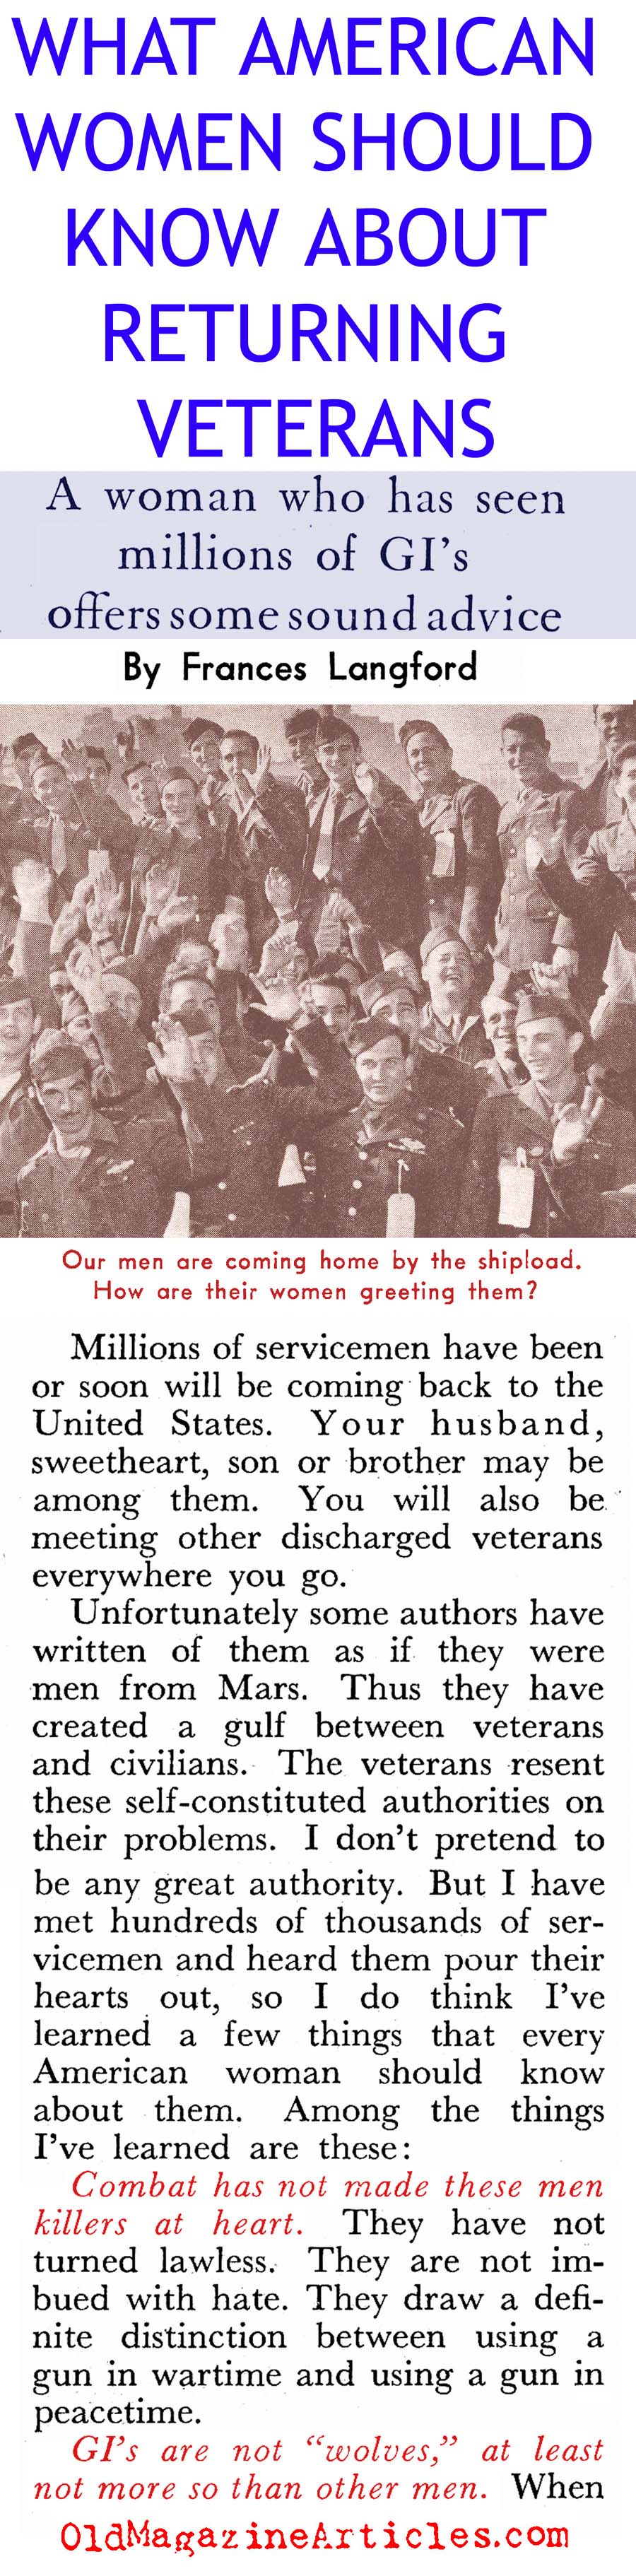 Understanding the Veterans <BR>(Pageant Magazine, 1945)